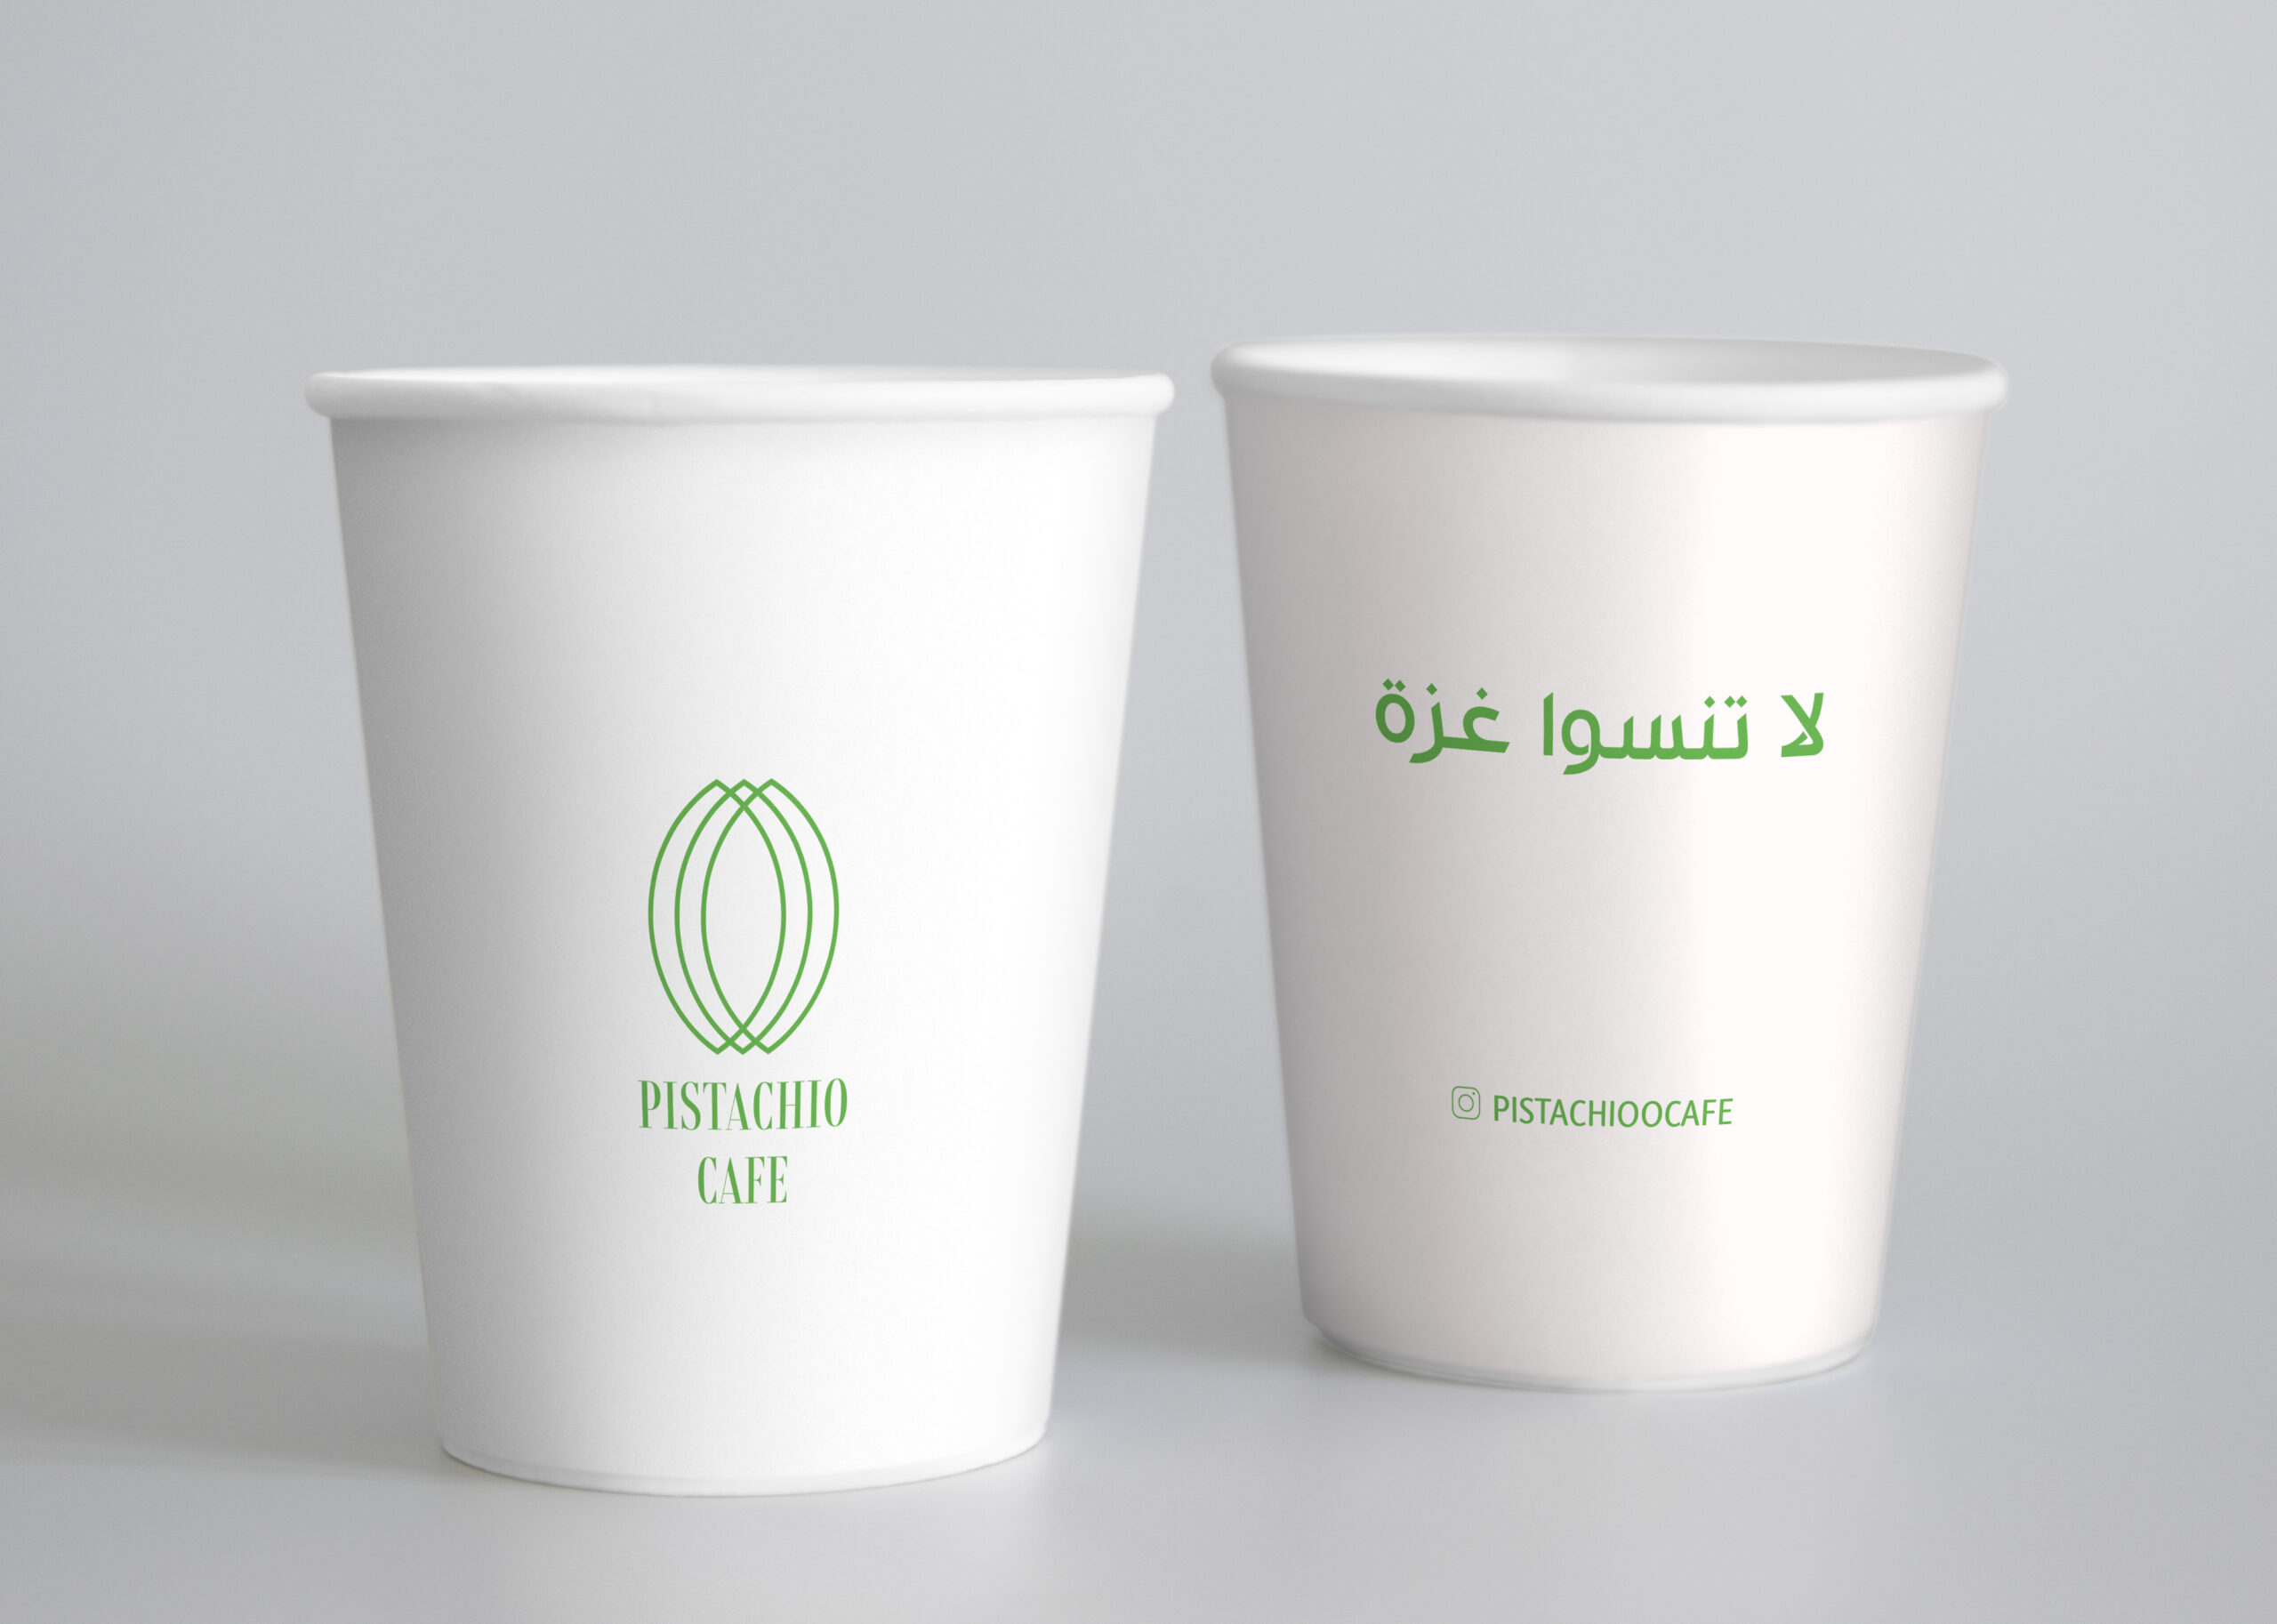 pistachio cafe logo coffee cup mockup 3